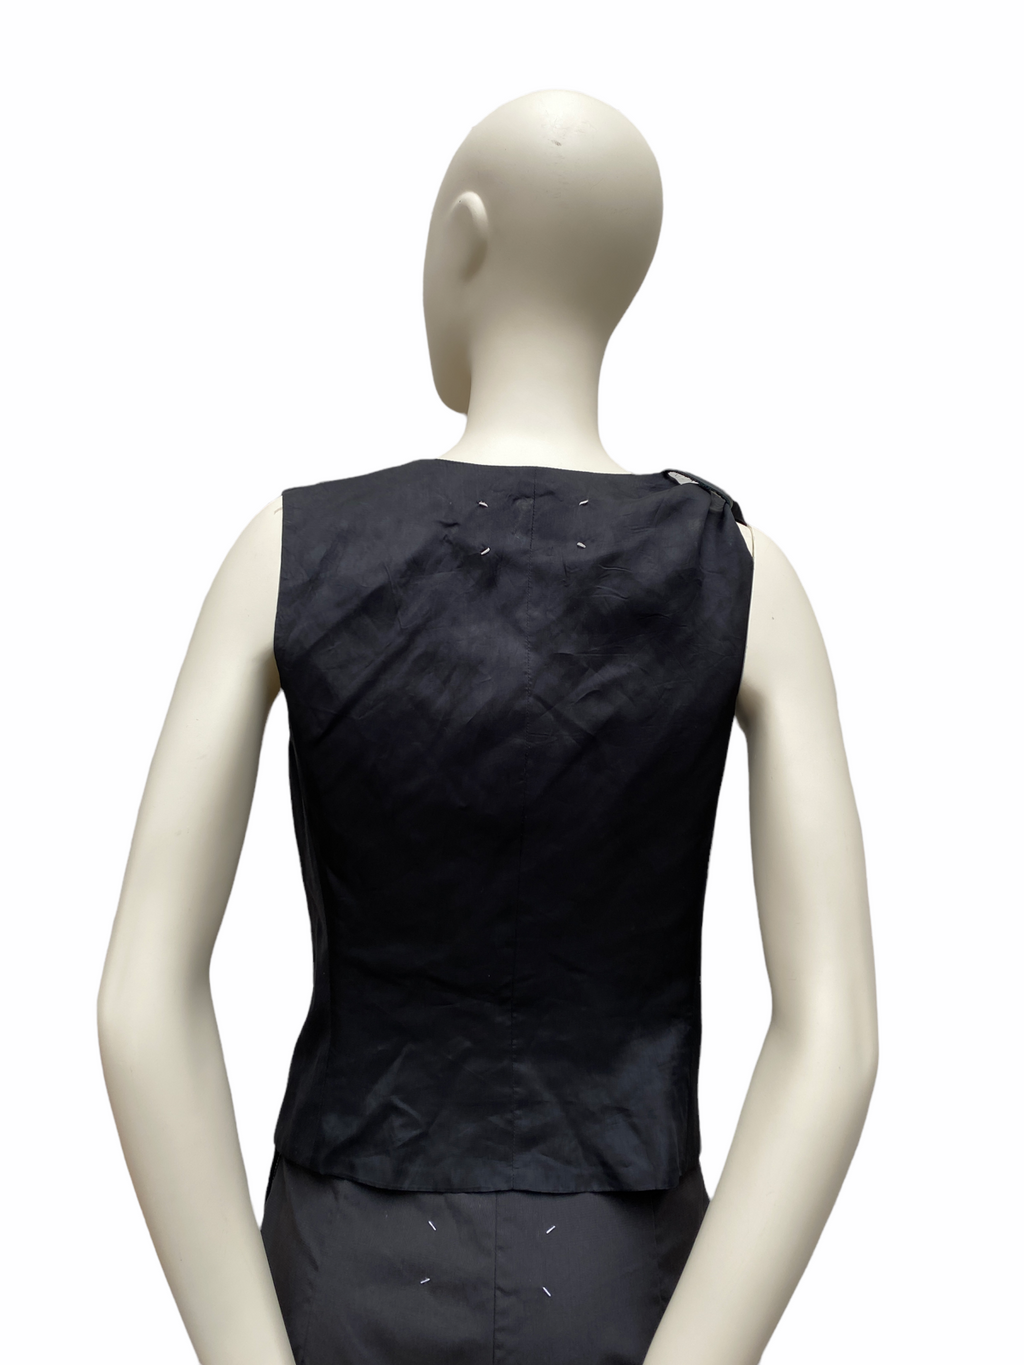 SS 2008 Black Waistcoat Vest Size